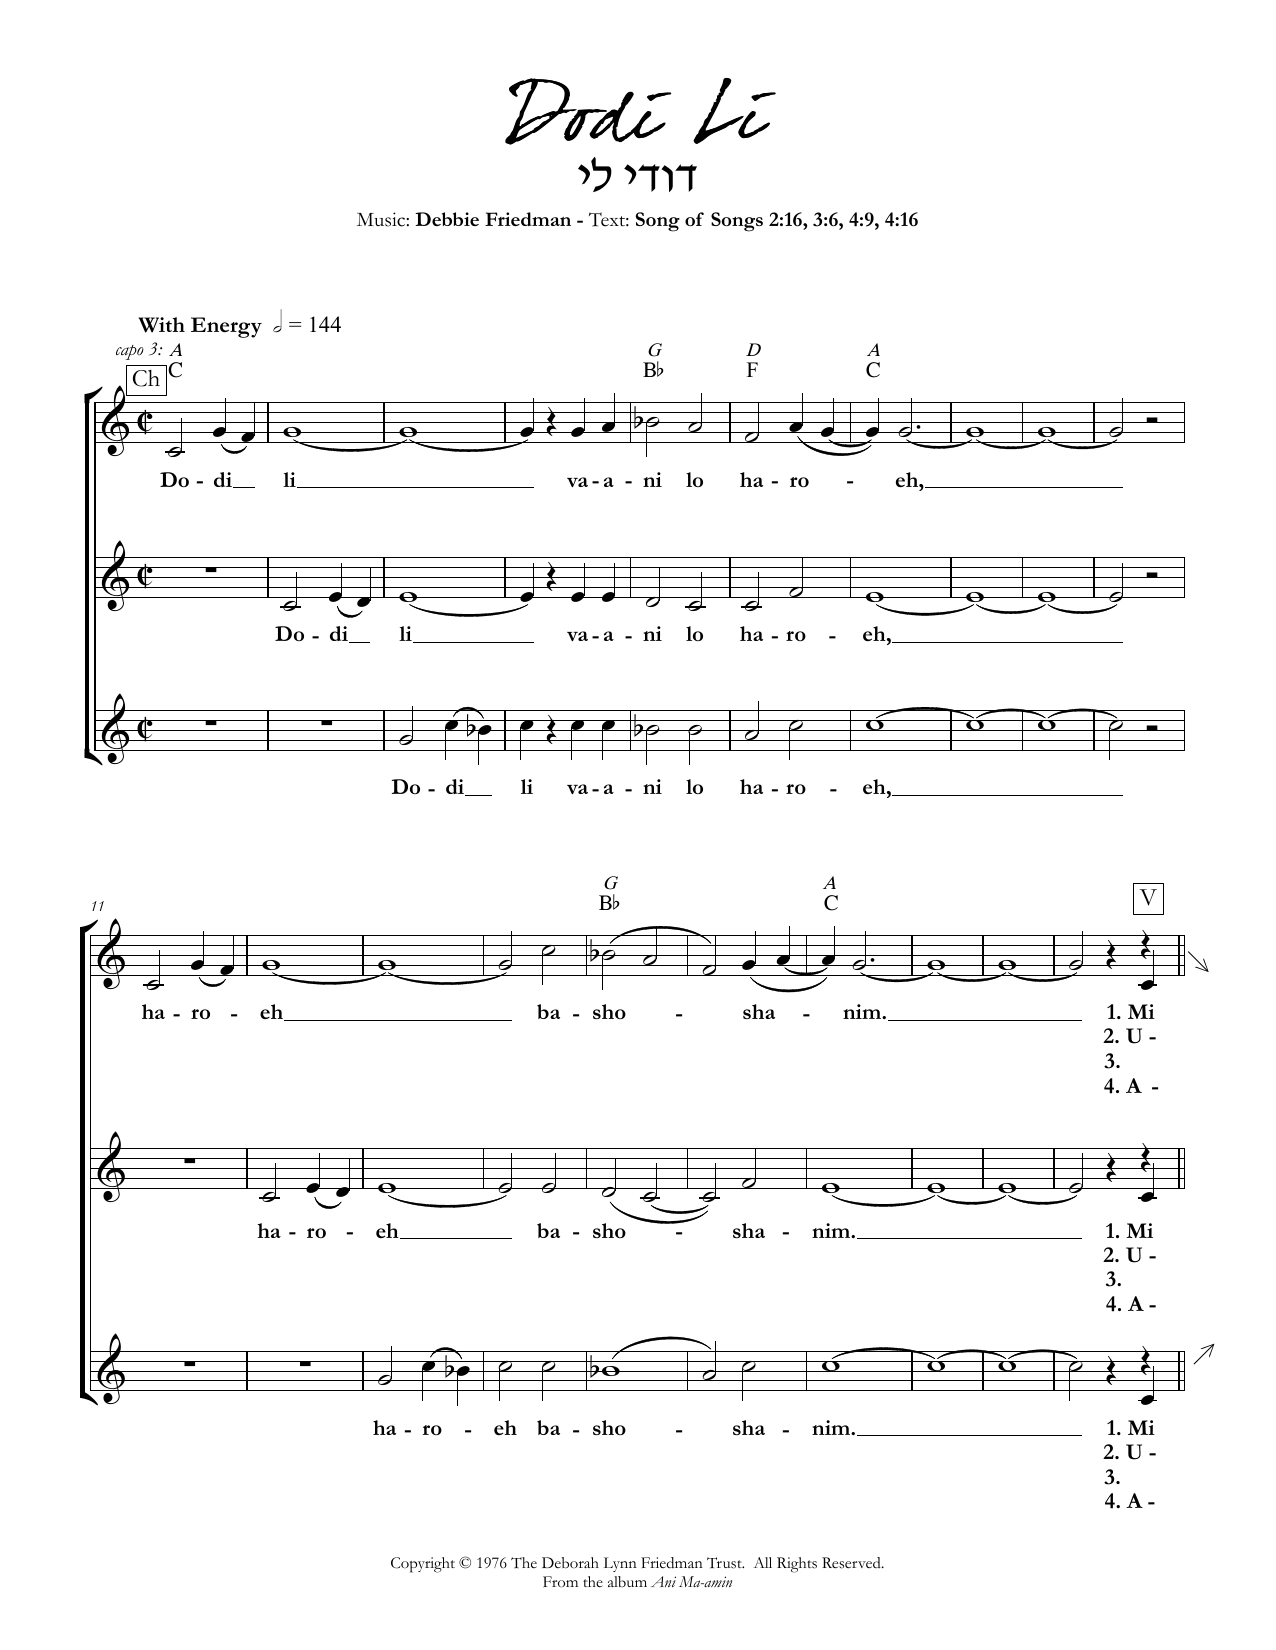 Download Debbie Friedman Dodi Li Sheet Music and learn how to play Lead Sheet / Fake Book PDF digital score in minutes